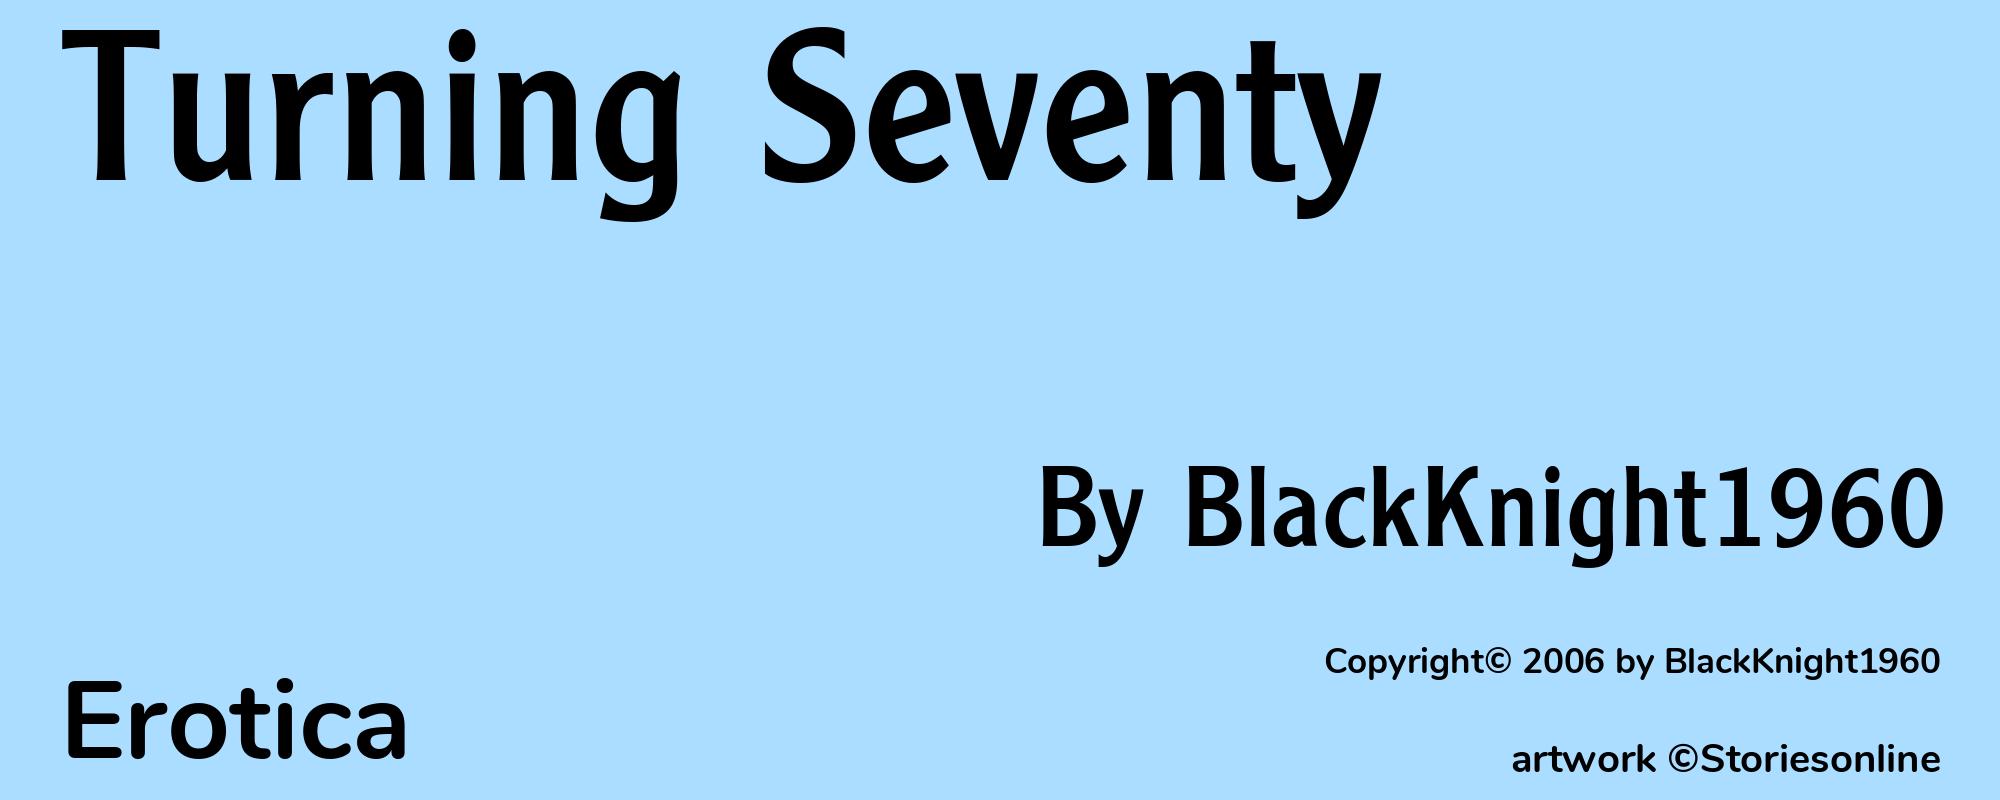 Turning Seventy - Cover